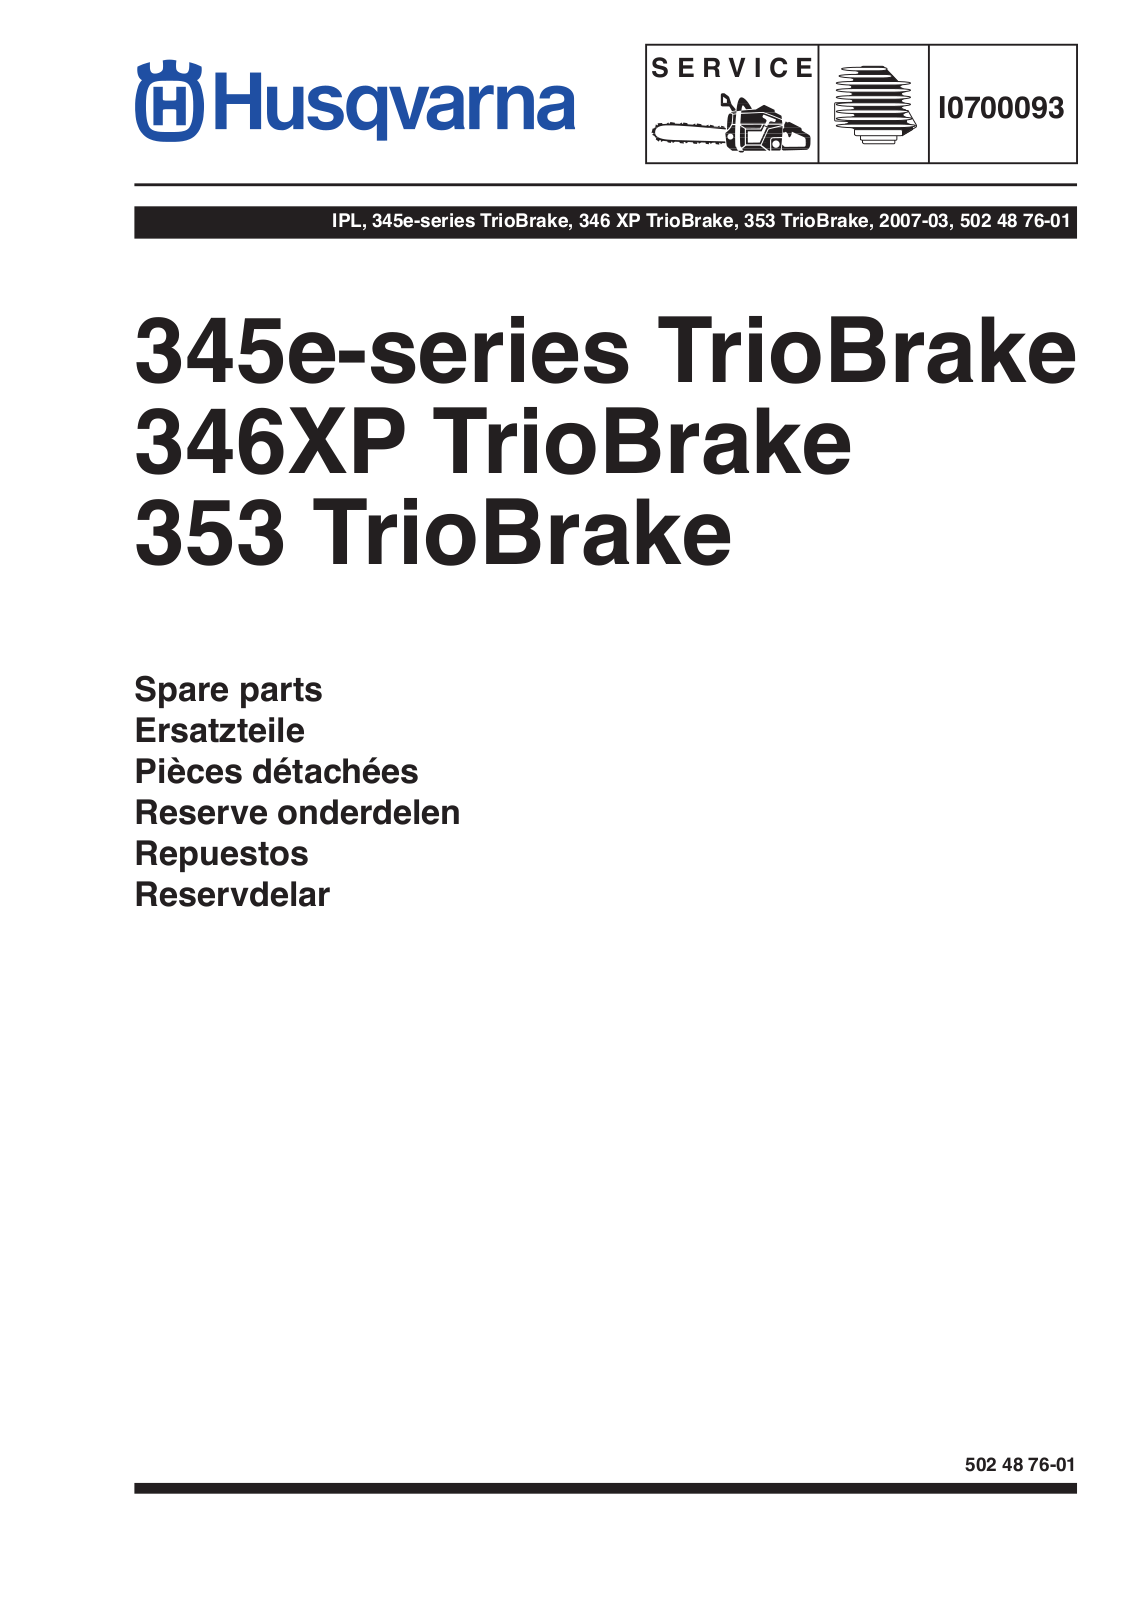 Husqvarna 353 TrioBrake parts catalog